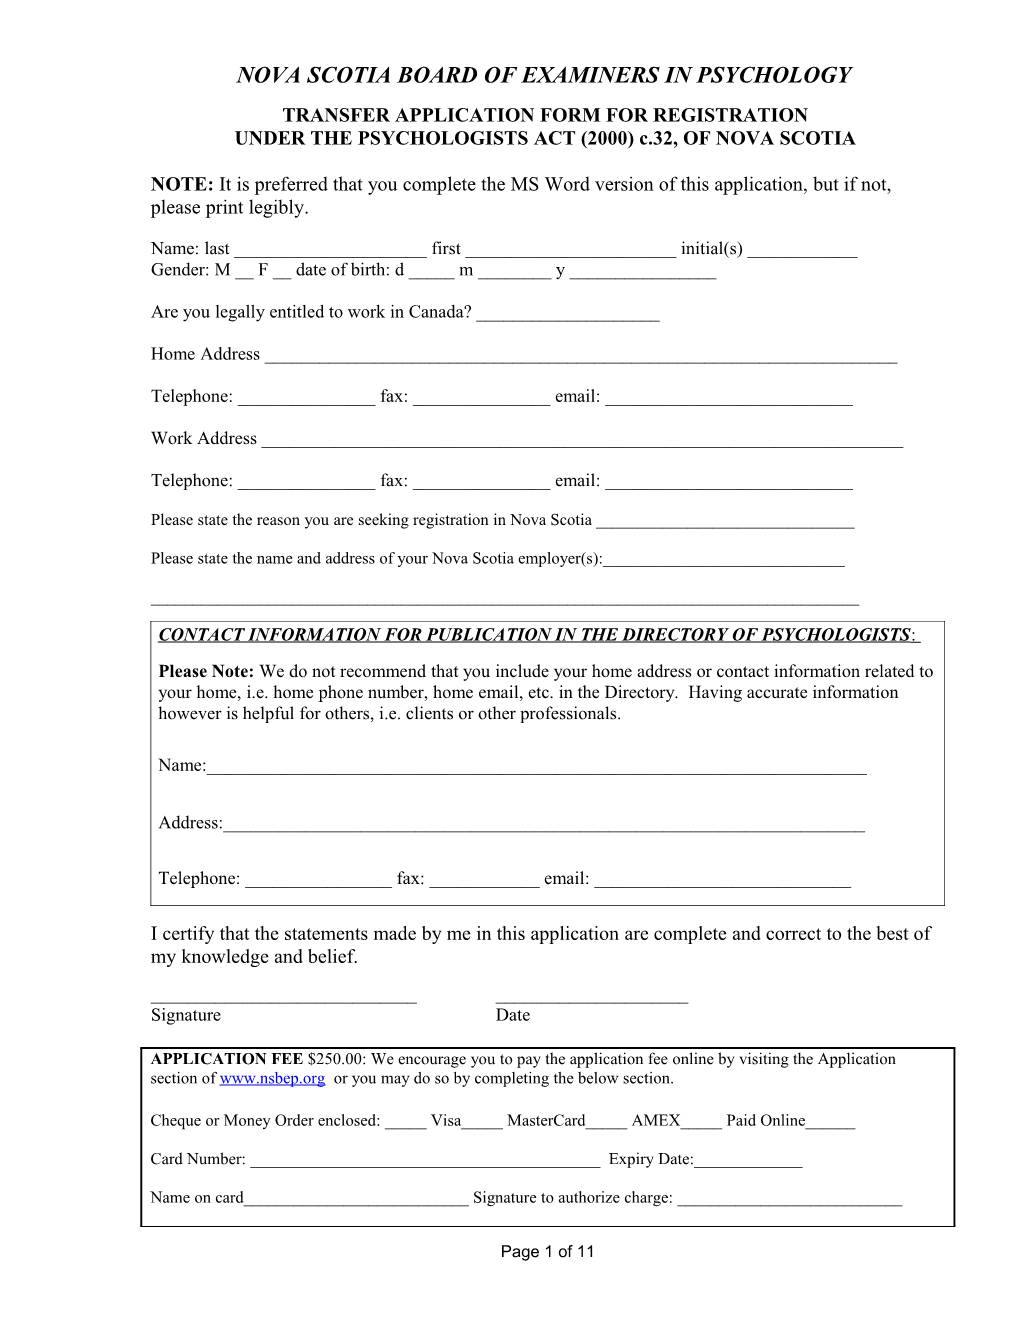 Mra Transfer Application Form for Registration